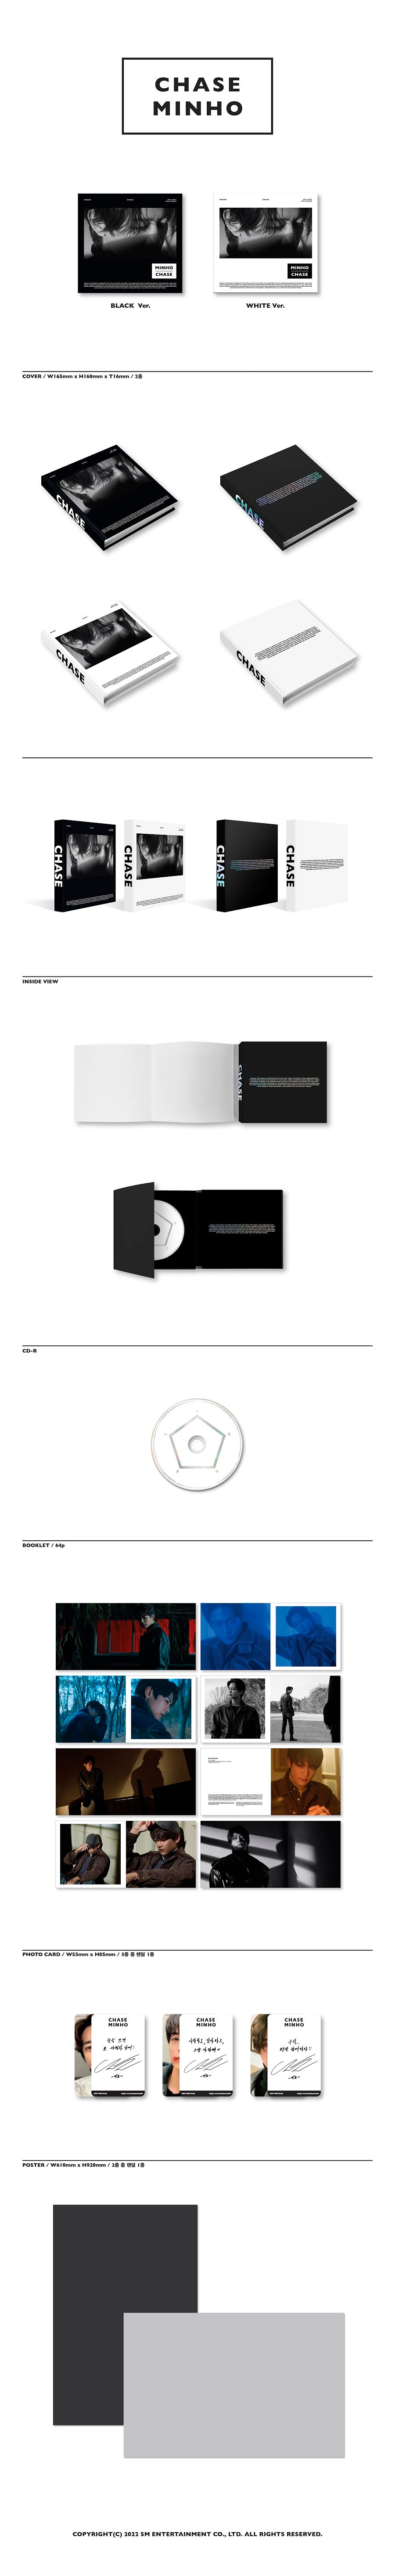 SHINee : Min Ho Mini Album Vol. 1 - CHASE (Complete Version)